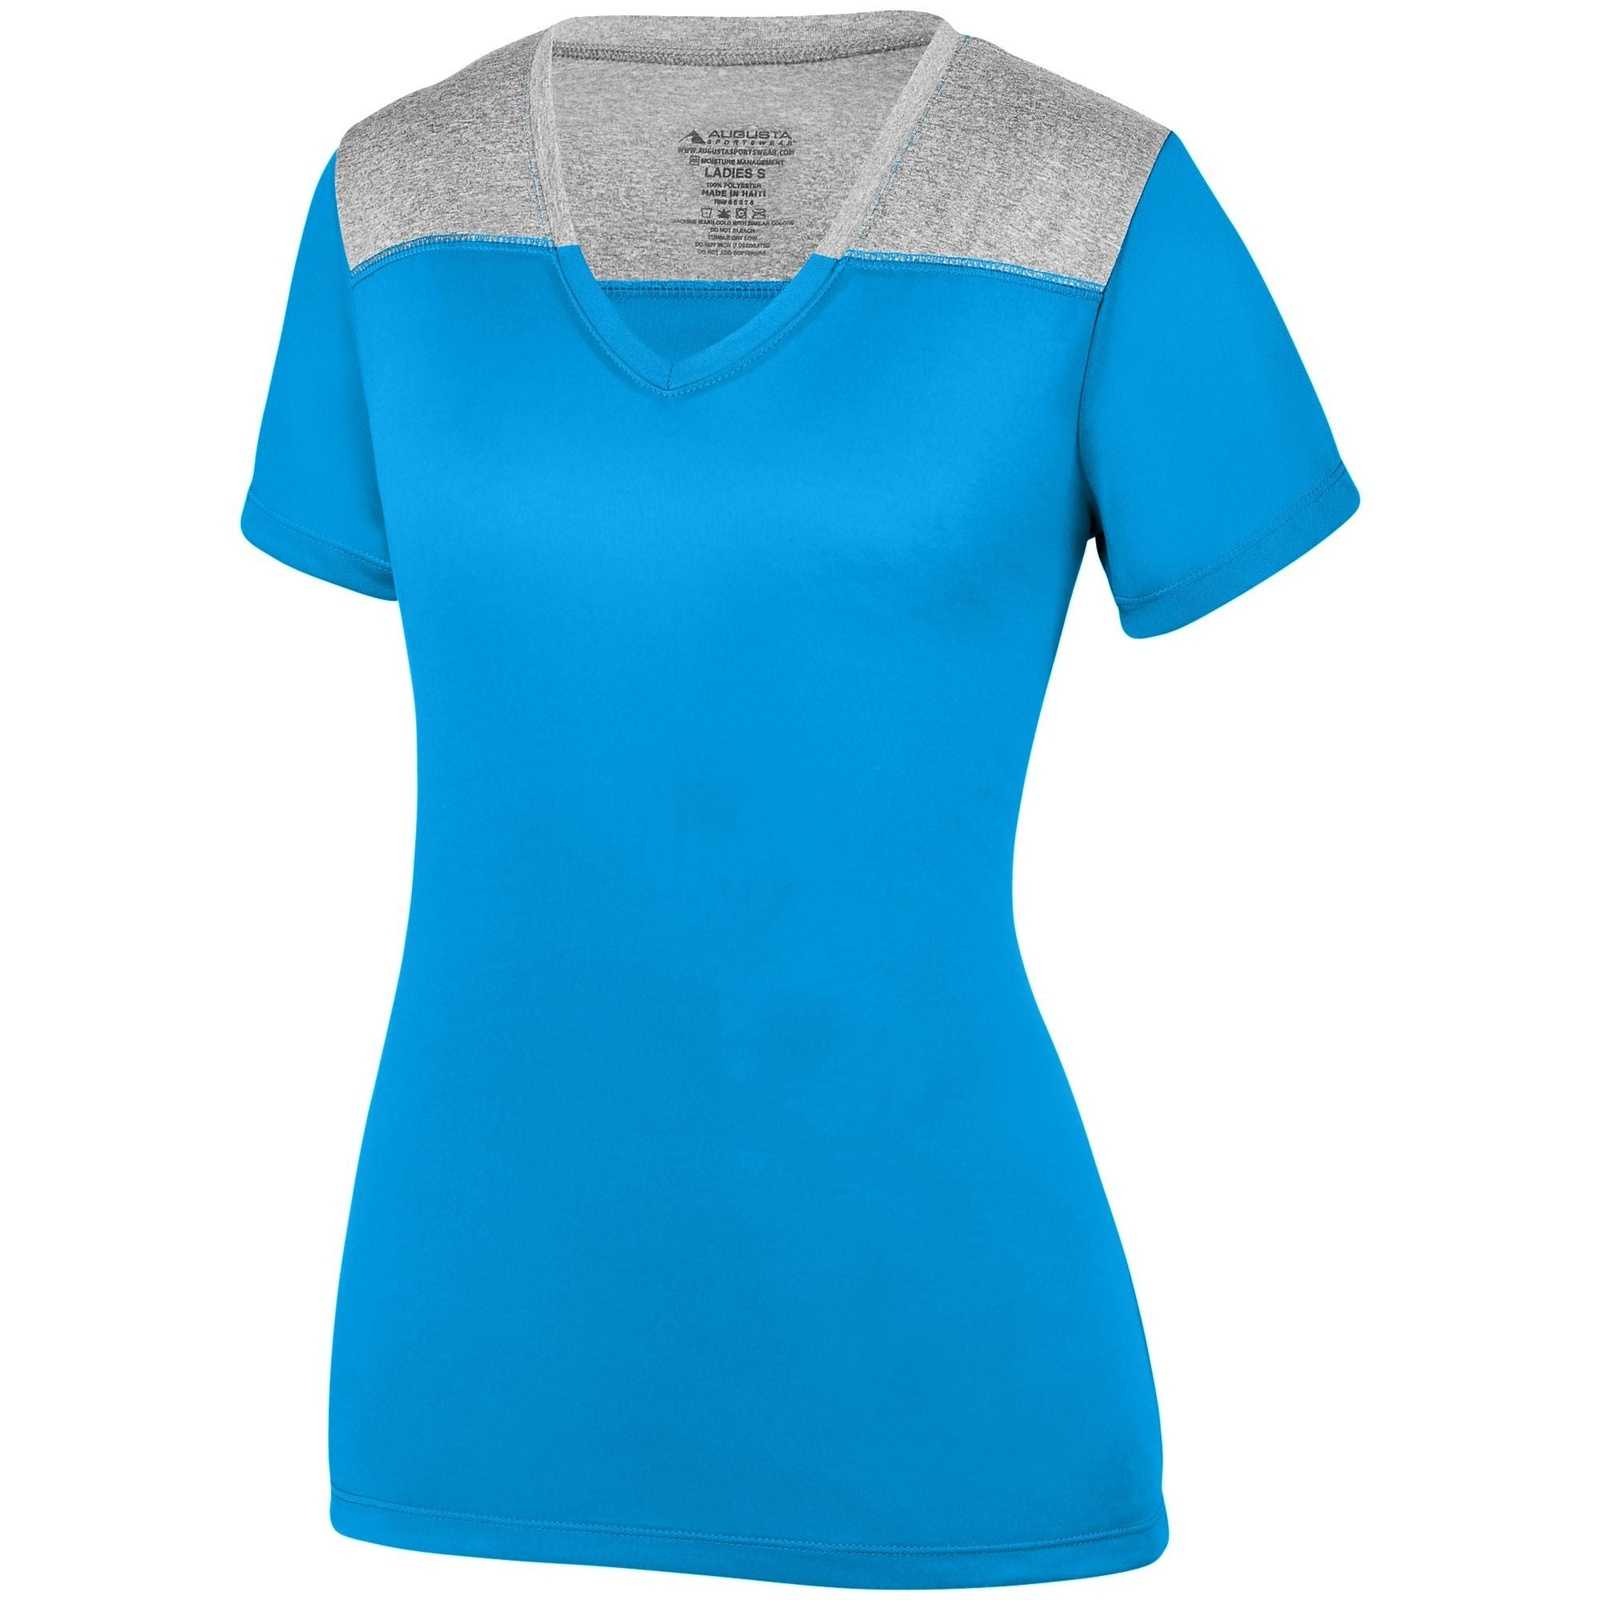 Augusta 3057 Ladies Challenge T-Shirt - Power Blue Graphite Heather - HIT a Double